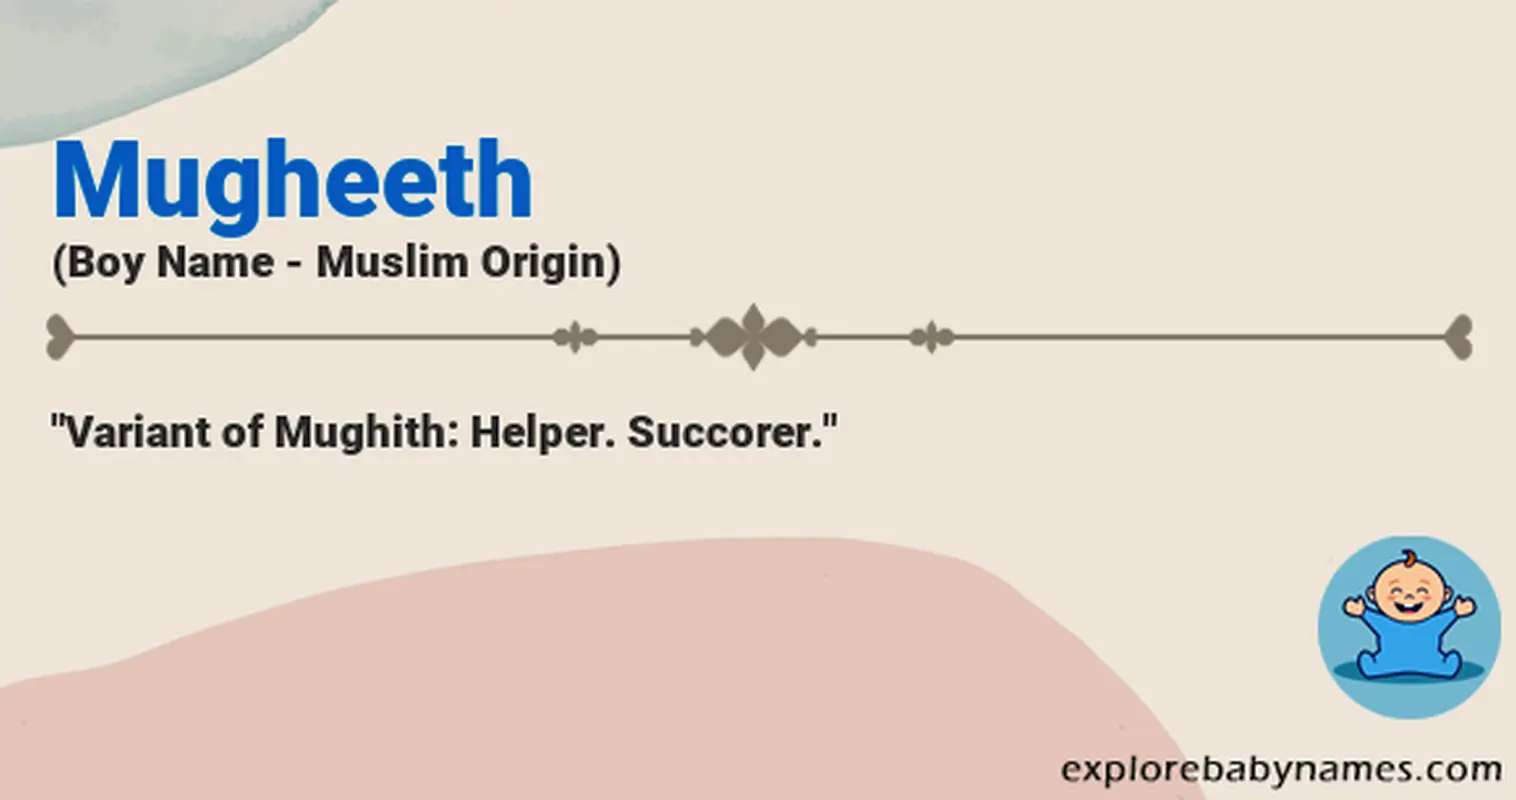 Meaning of Mugheeth